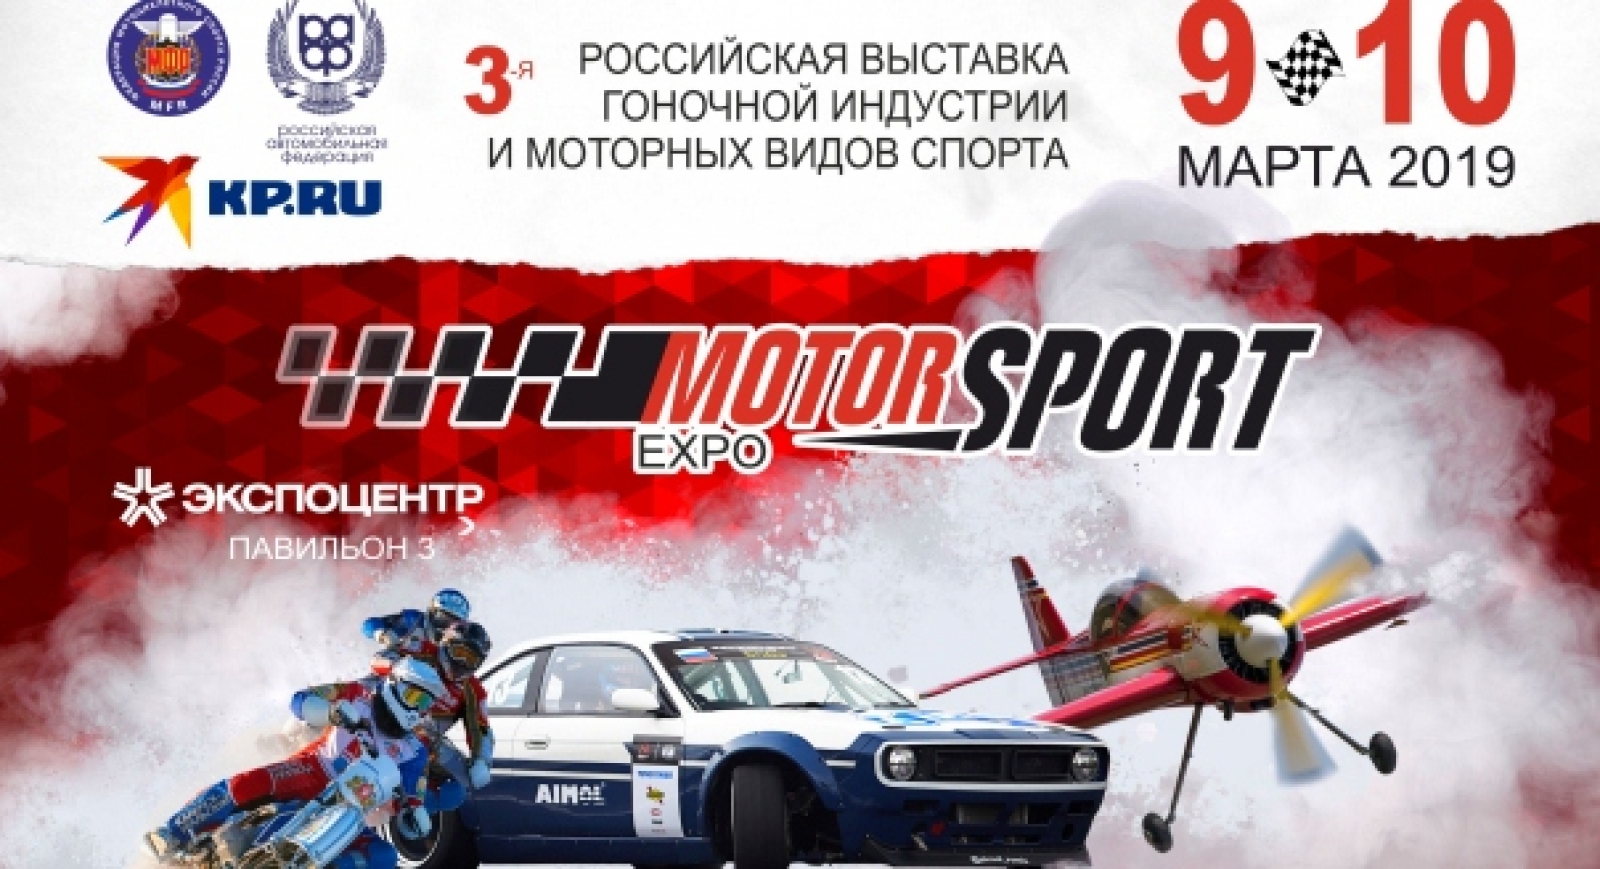 Motorsport Expo 2019 - Самые быстрые в центре Москвы!